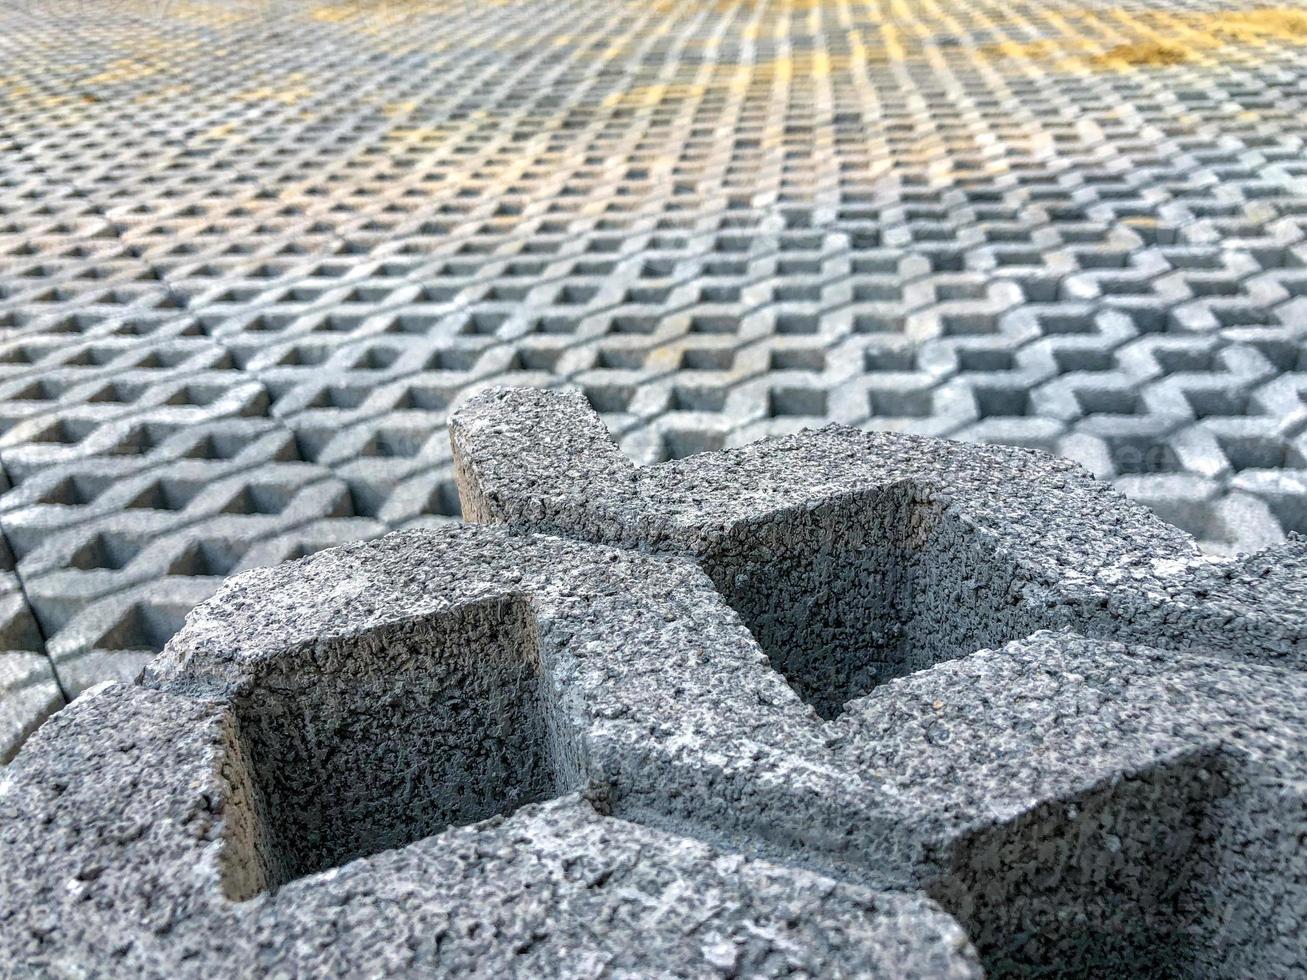 azulejo de bloco de tijolo de pedra de cor cinza com grama verde e areia como plano de fundo ou textura. foto